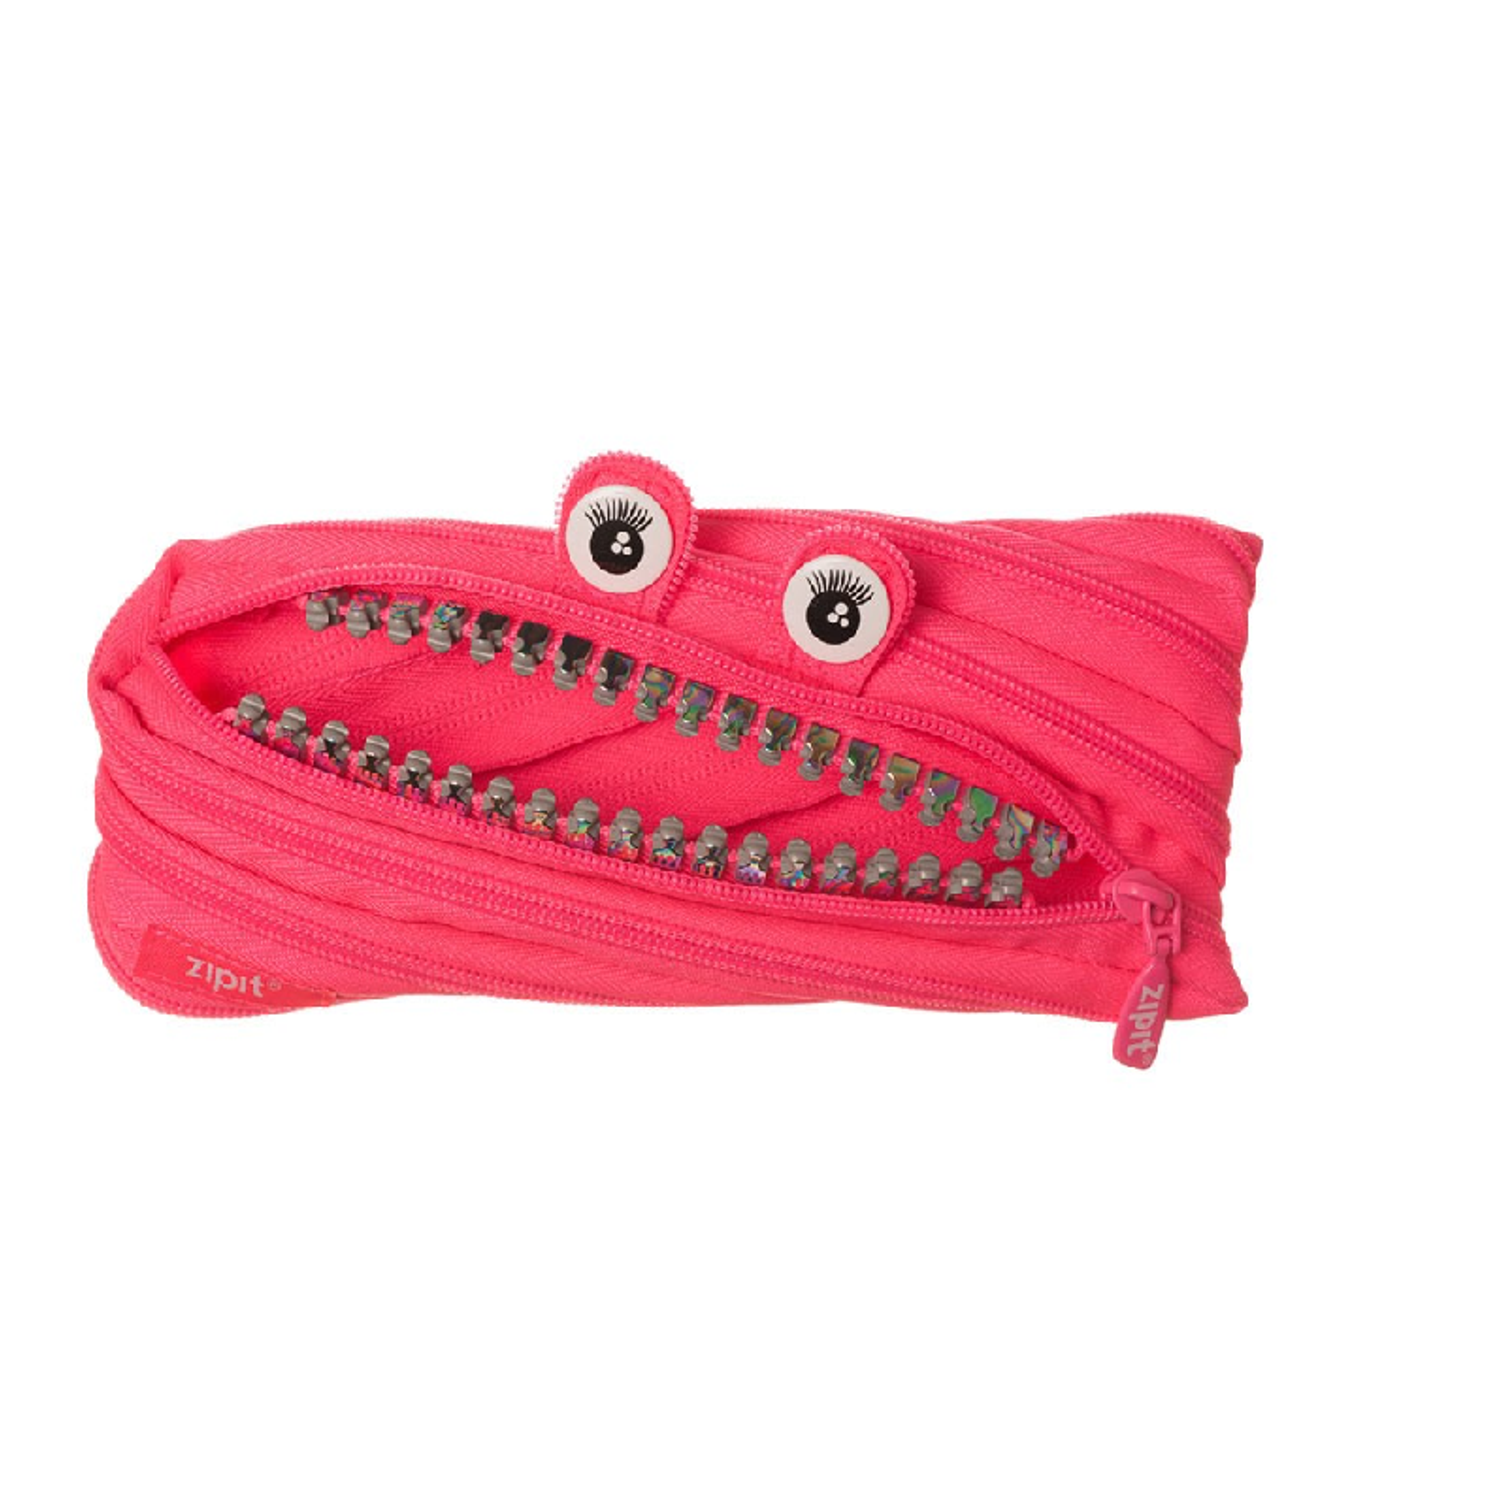 Пенал-сумочка Zipit GRILLZ POUCH цвет розовый - фото 1